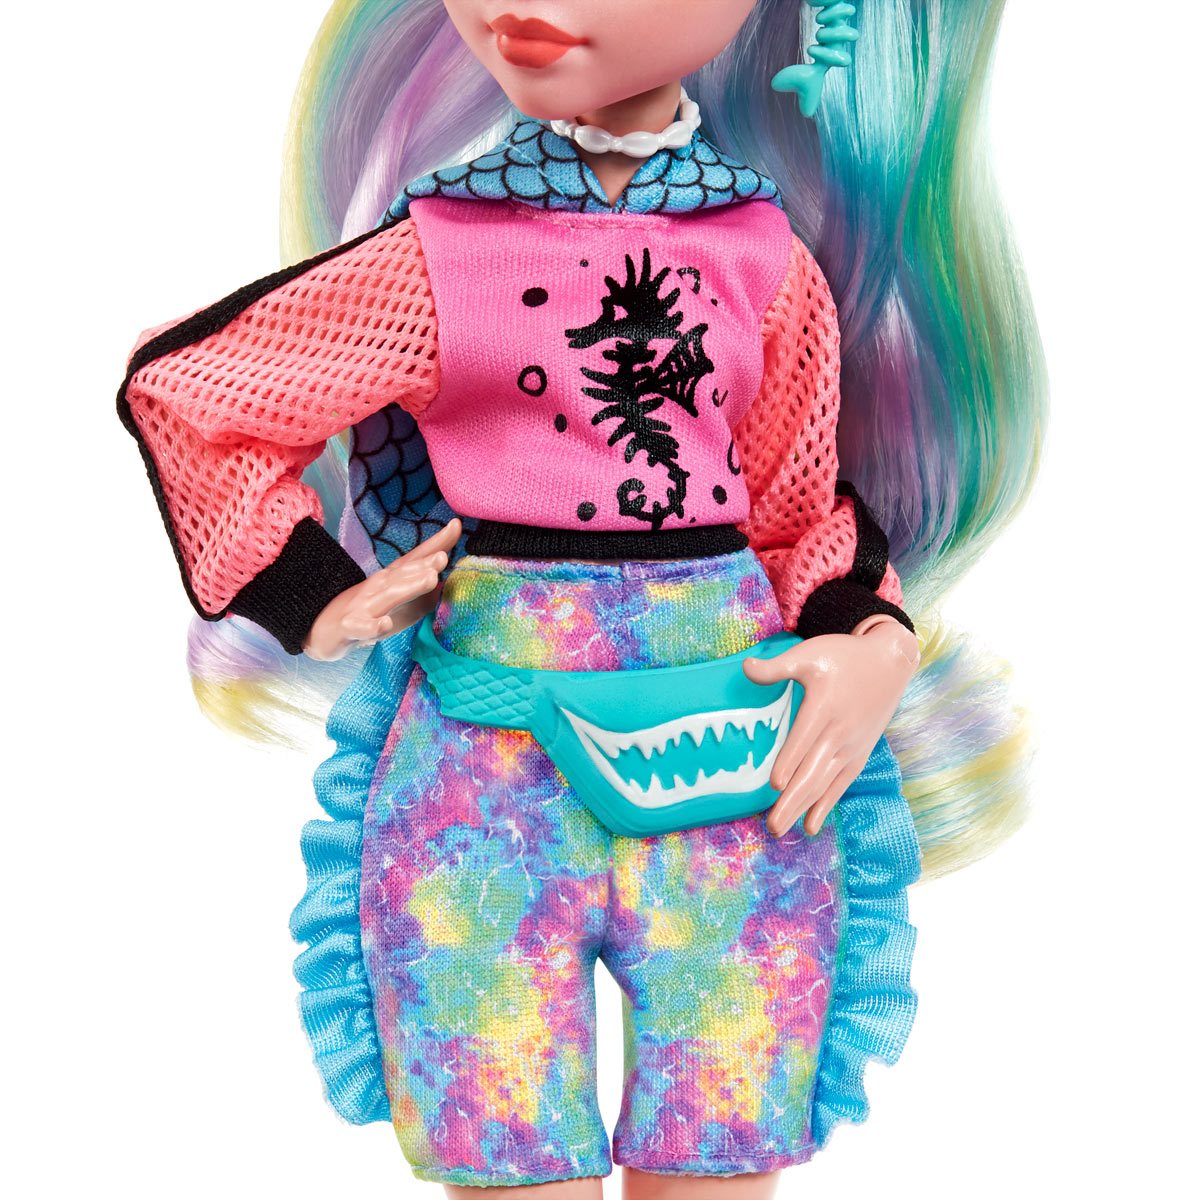 Monster High Lagoona Blue Doll - Entertainment Earth